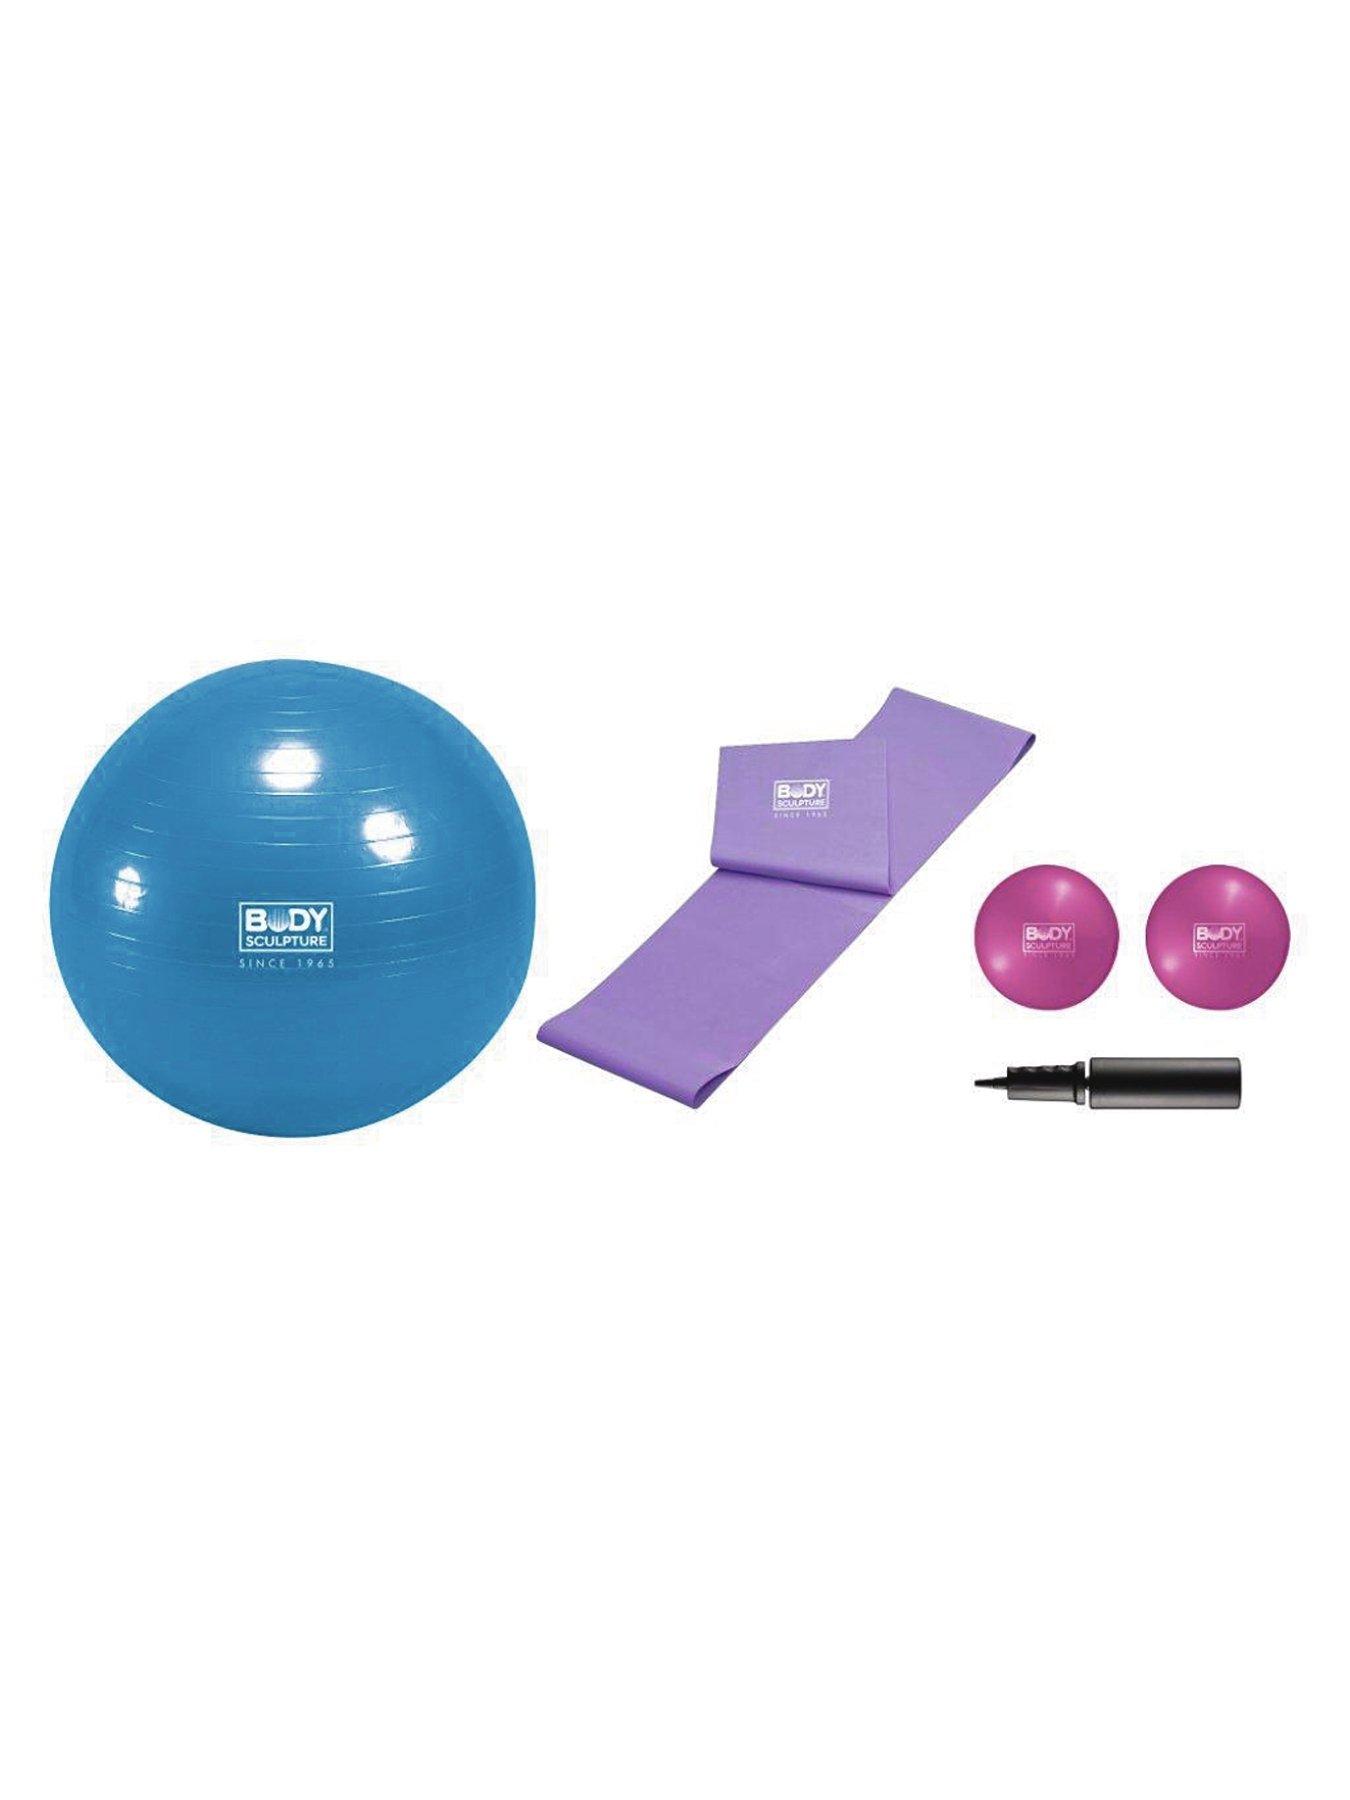 Modest Lavender Purple Cheap Yoga Mat for Pilates Exercises EVA